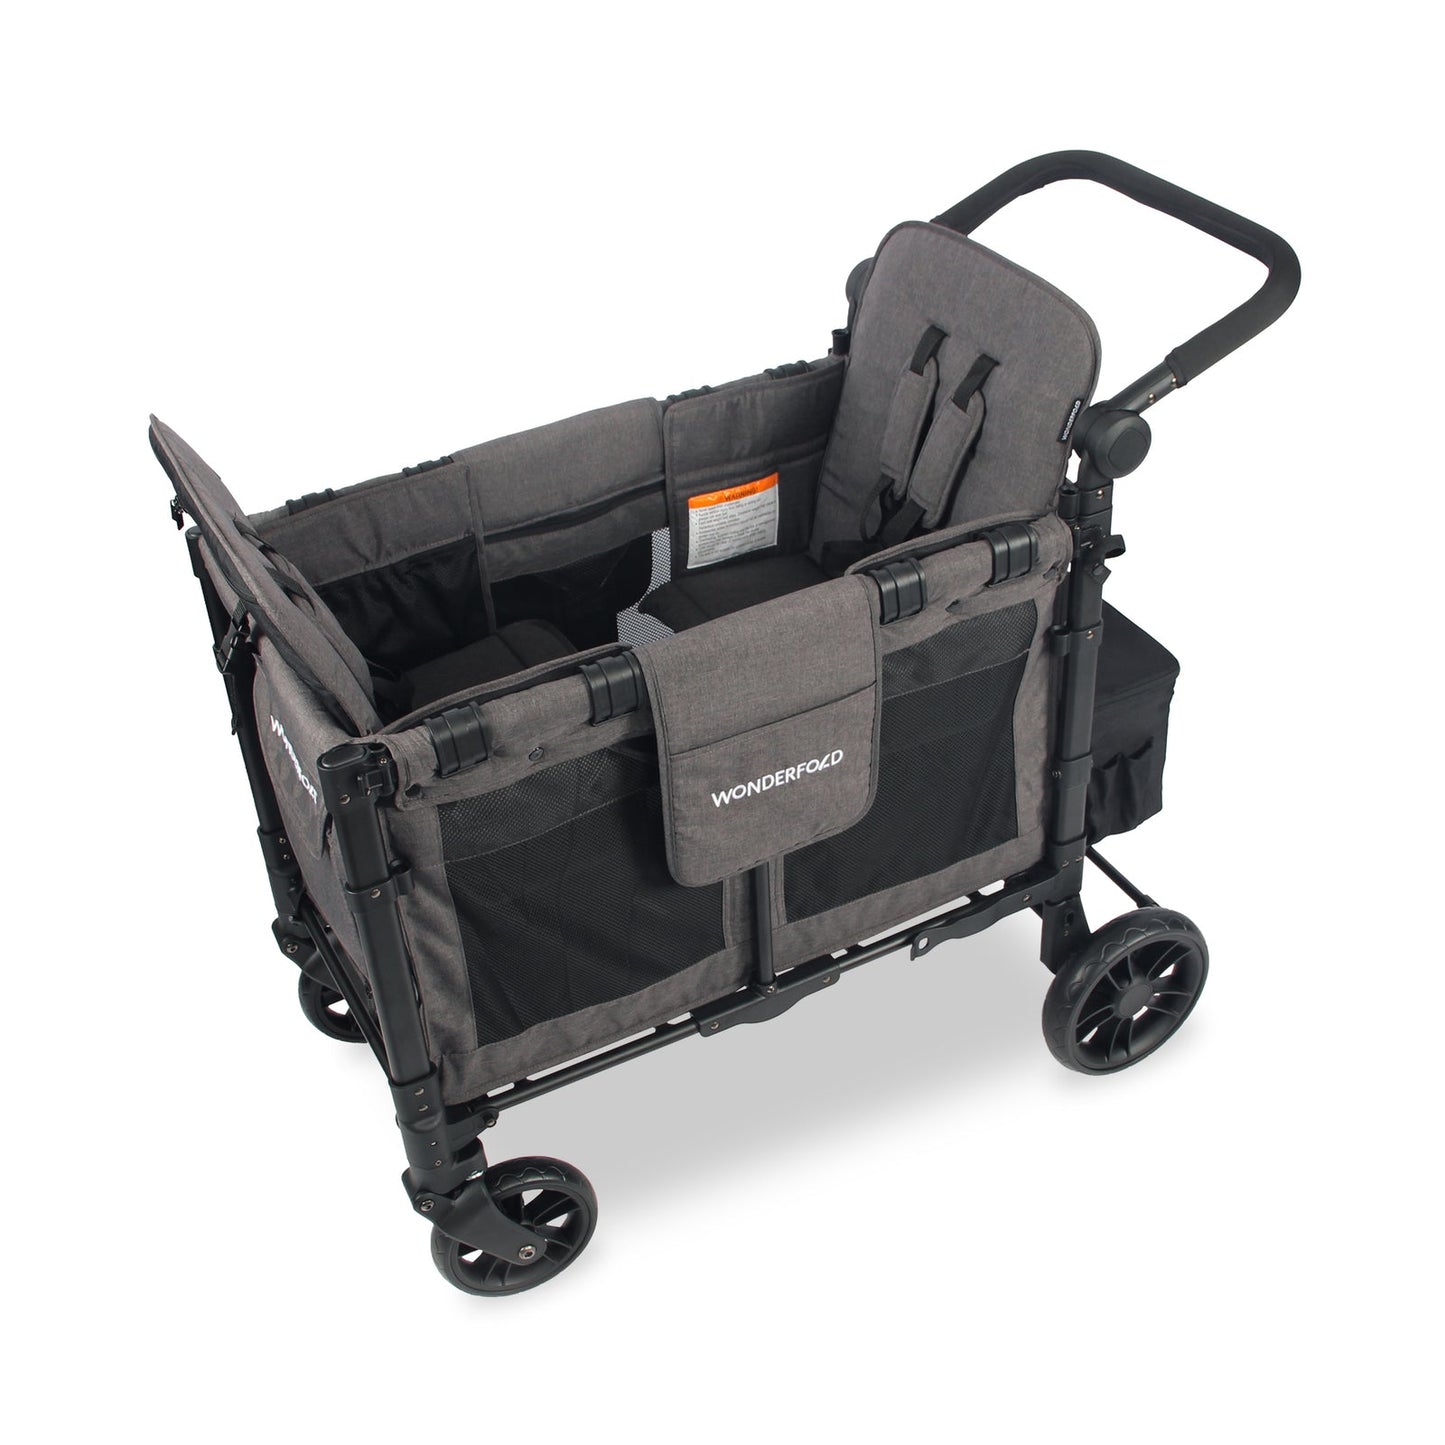 W2 Elite Double Stroller Wagon - Charcoal Gray